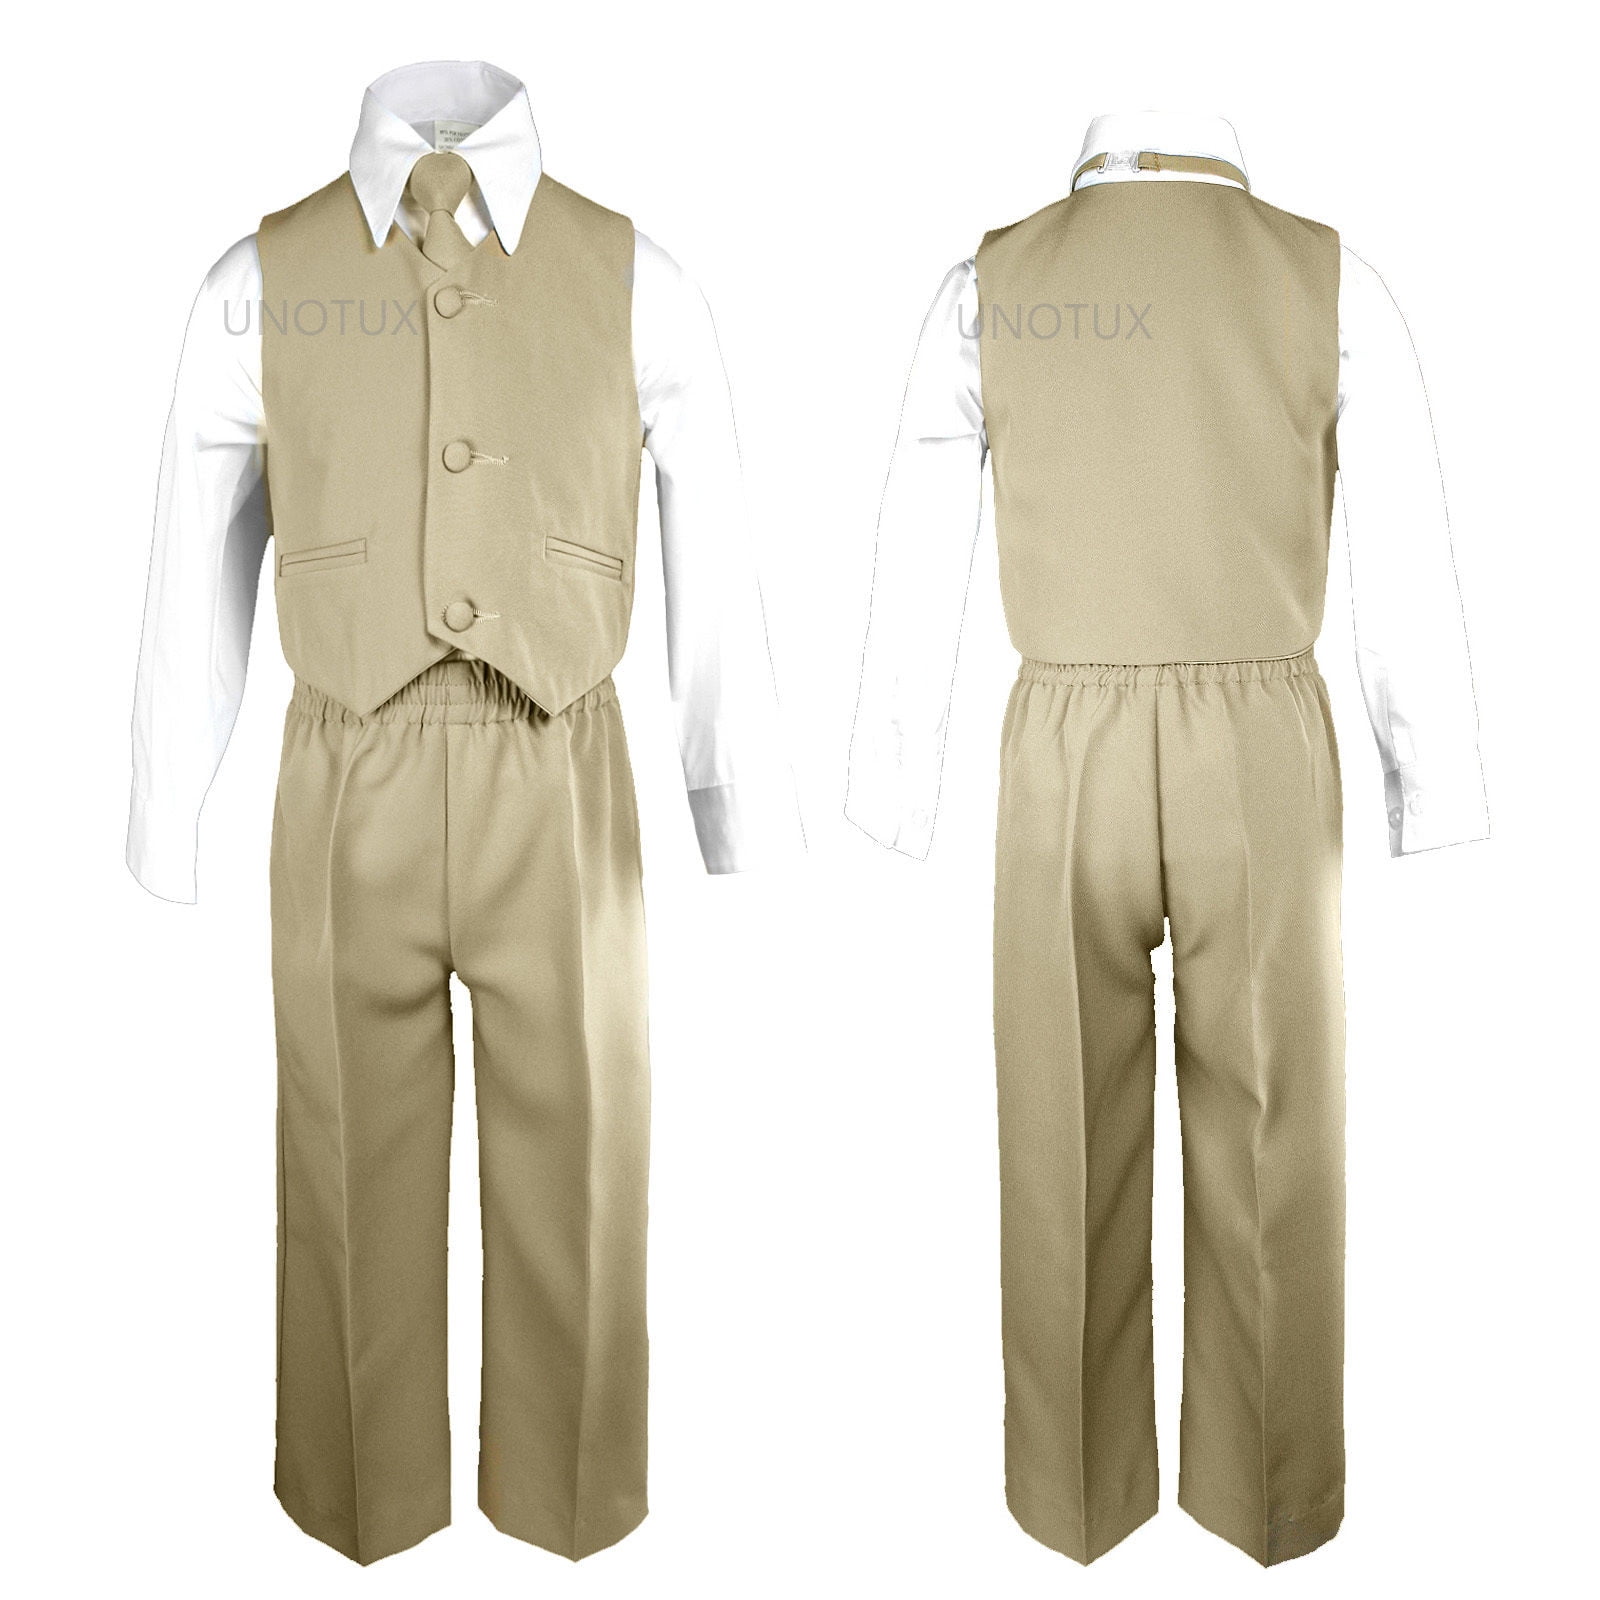 Stone Khaki Boy Infant & Toddler Formal Wedding Party Vest Suit New born to 4T 